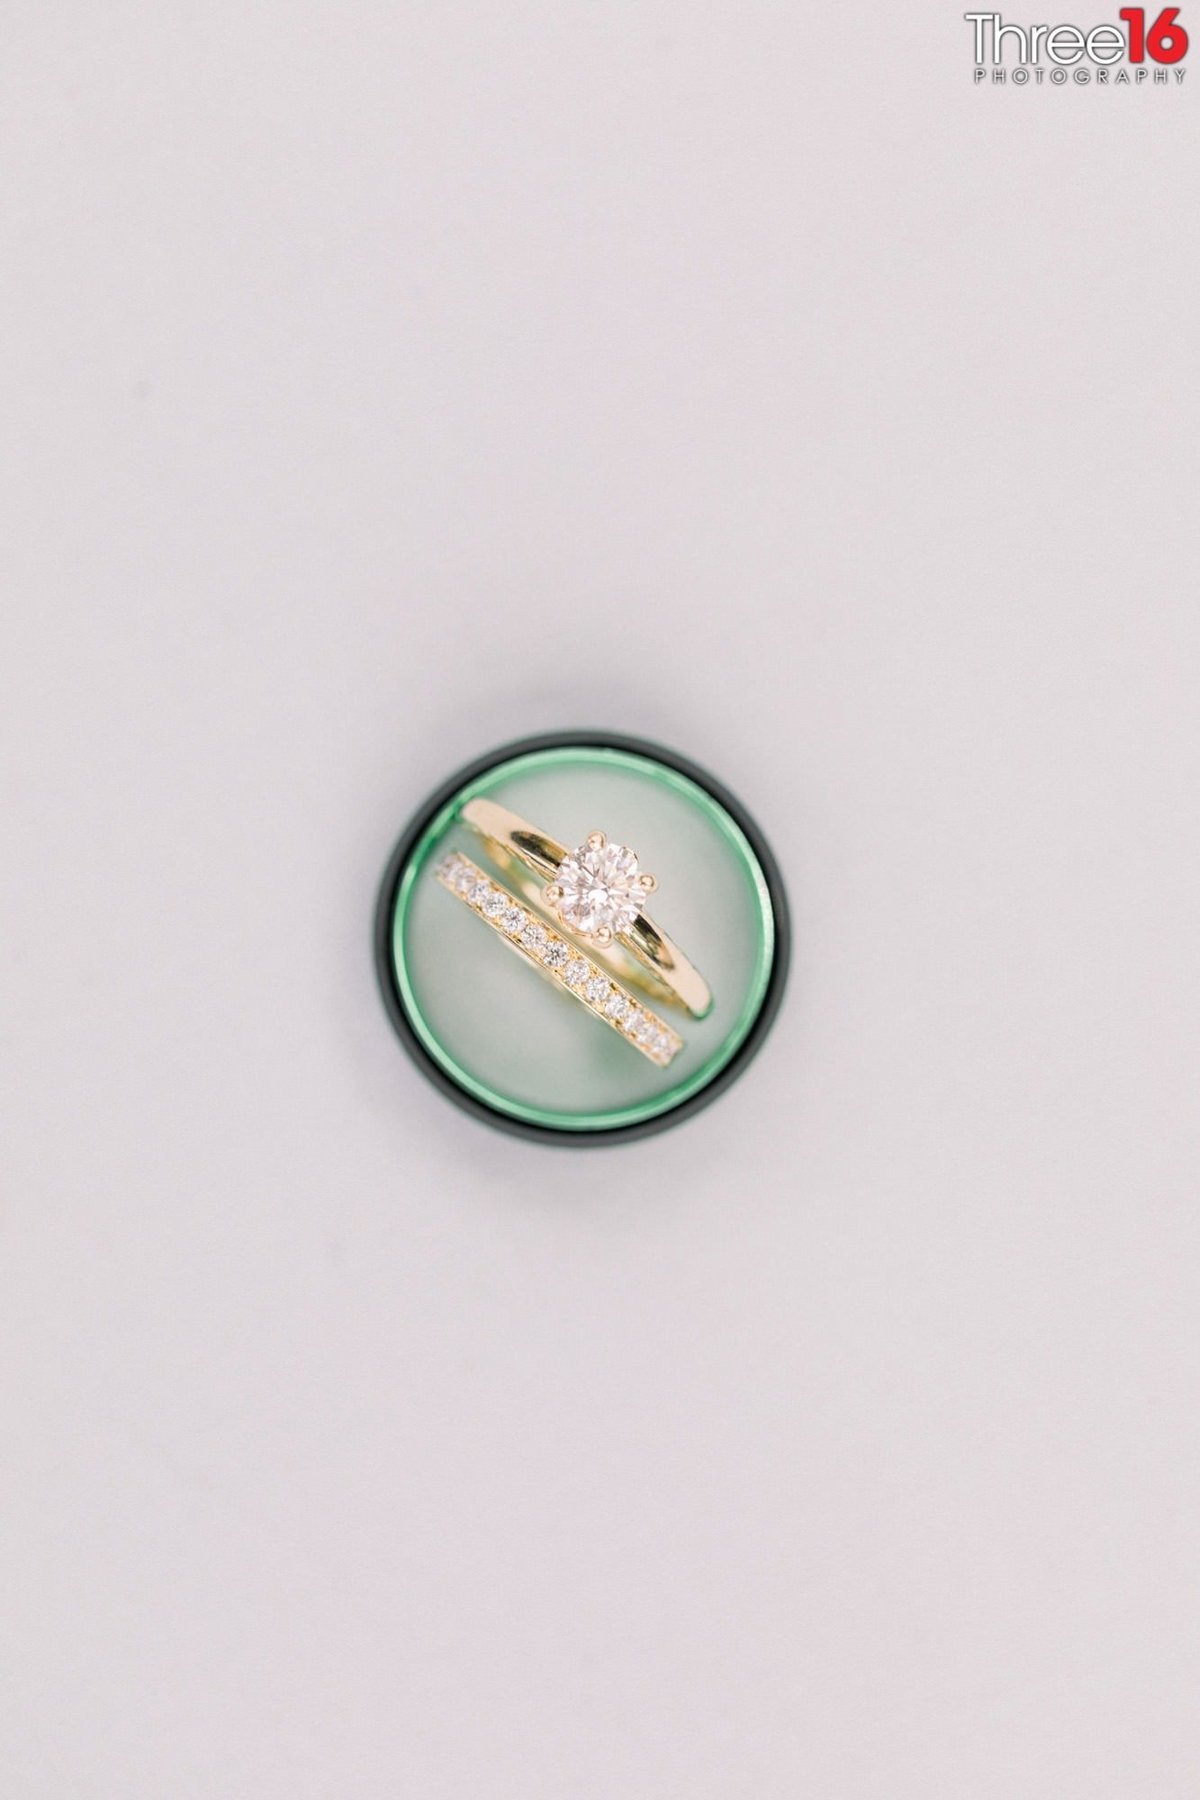 Bride's wedding ring sits inside her Groom's wedding ring